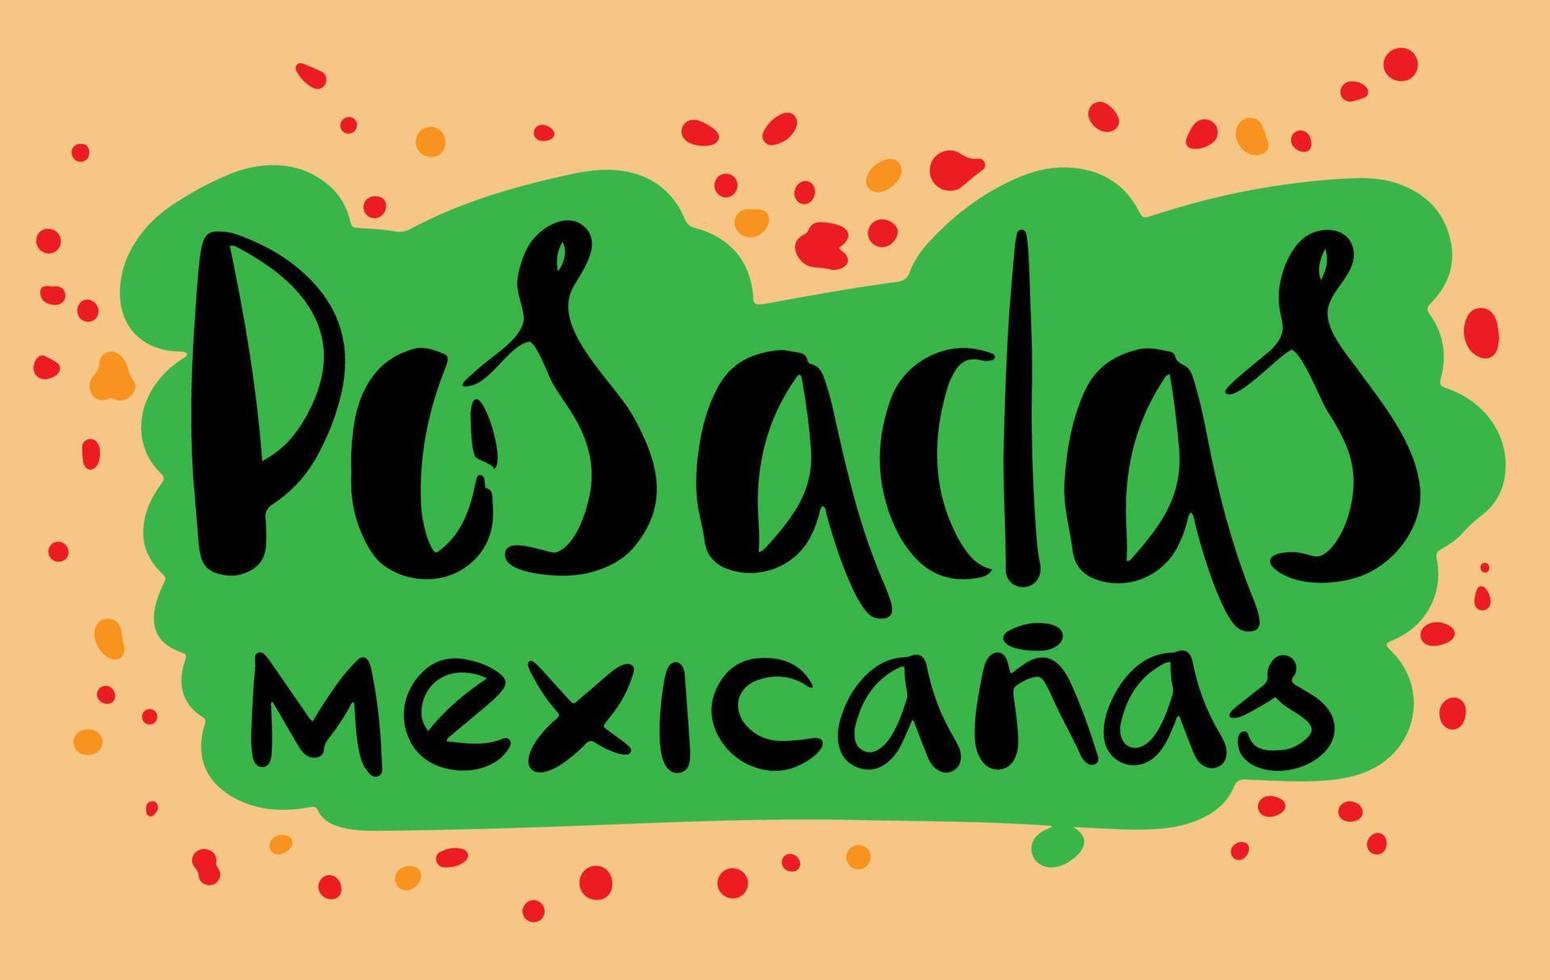 posadas mexicanas - texte espagnol d'hébergement de noël, emblème de vacances vecteur